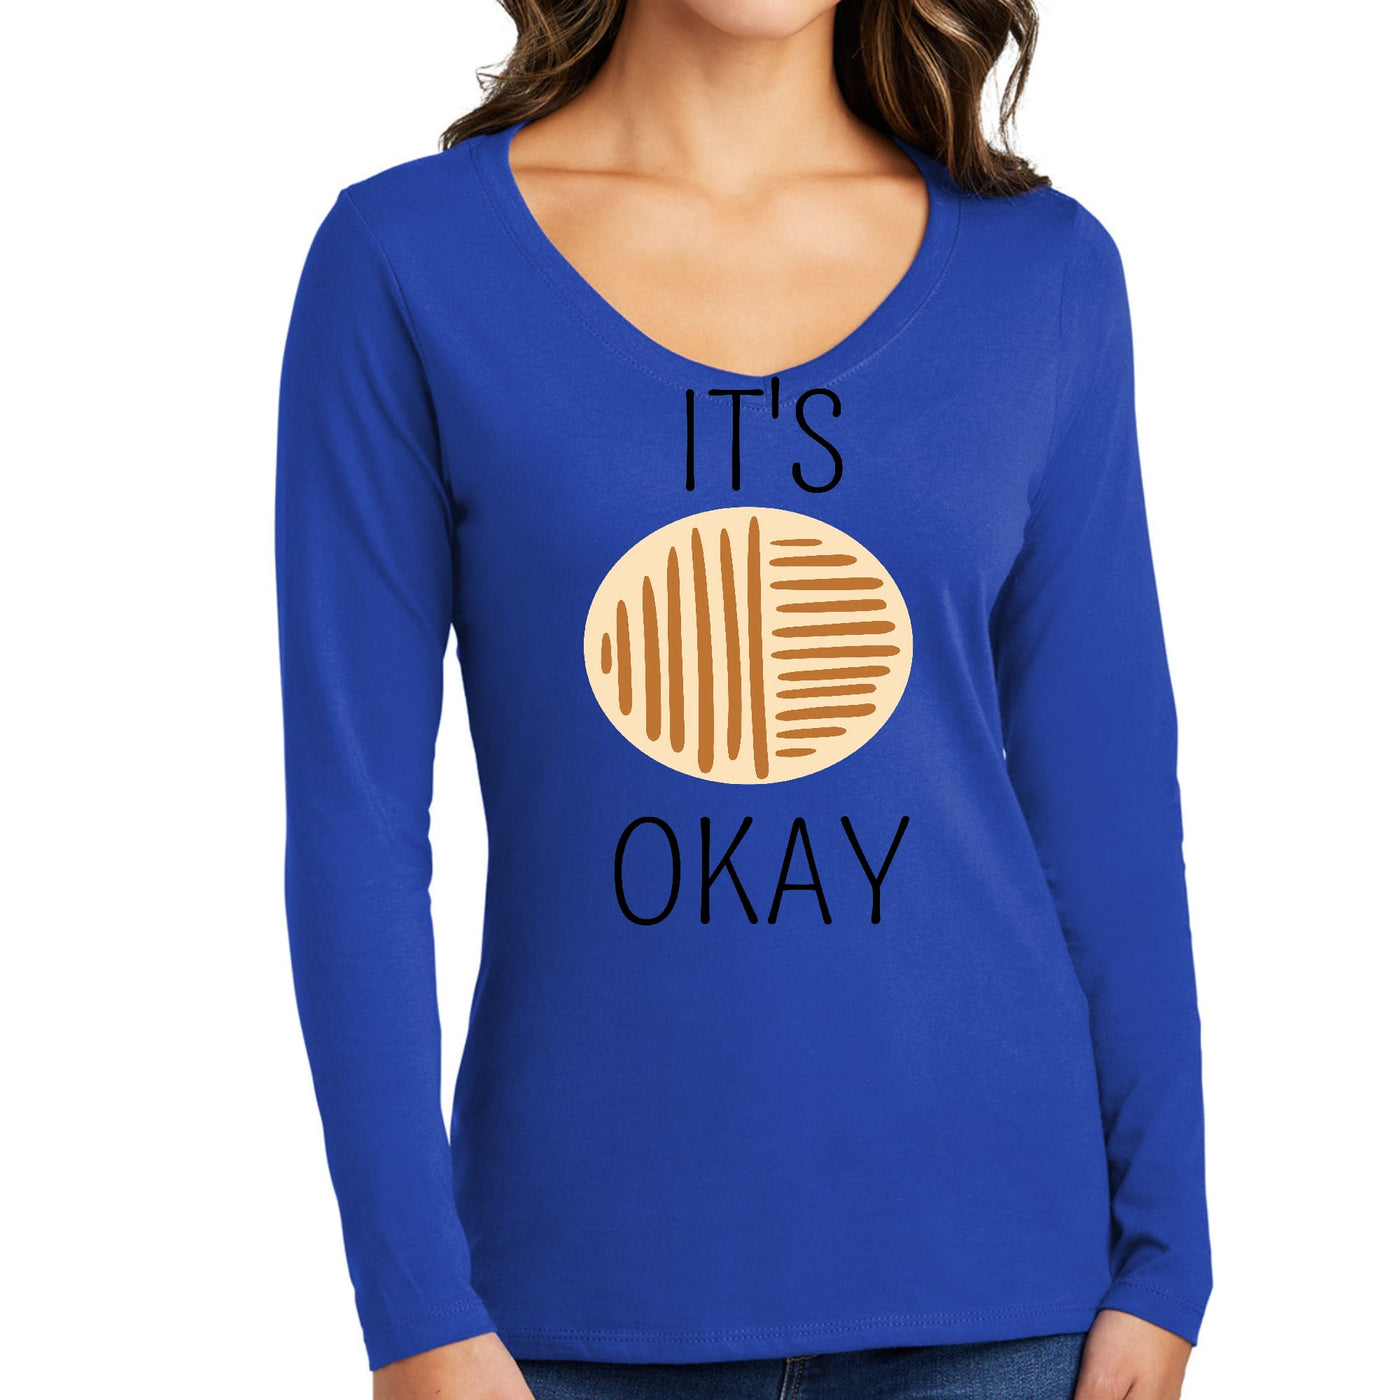 Womens Long Sleeve V-neck Graphic T-shirt Say It Soul Its Okay, - Womens